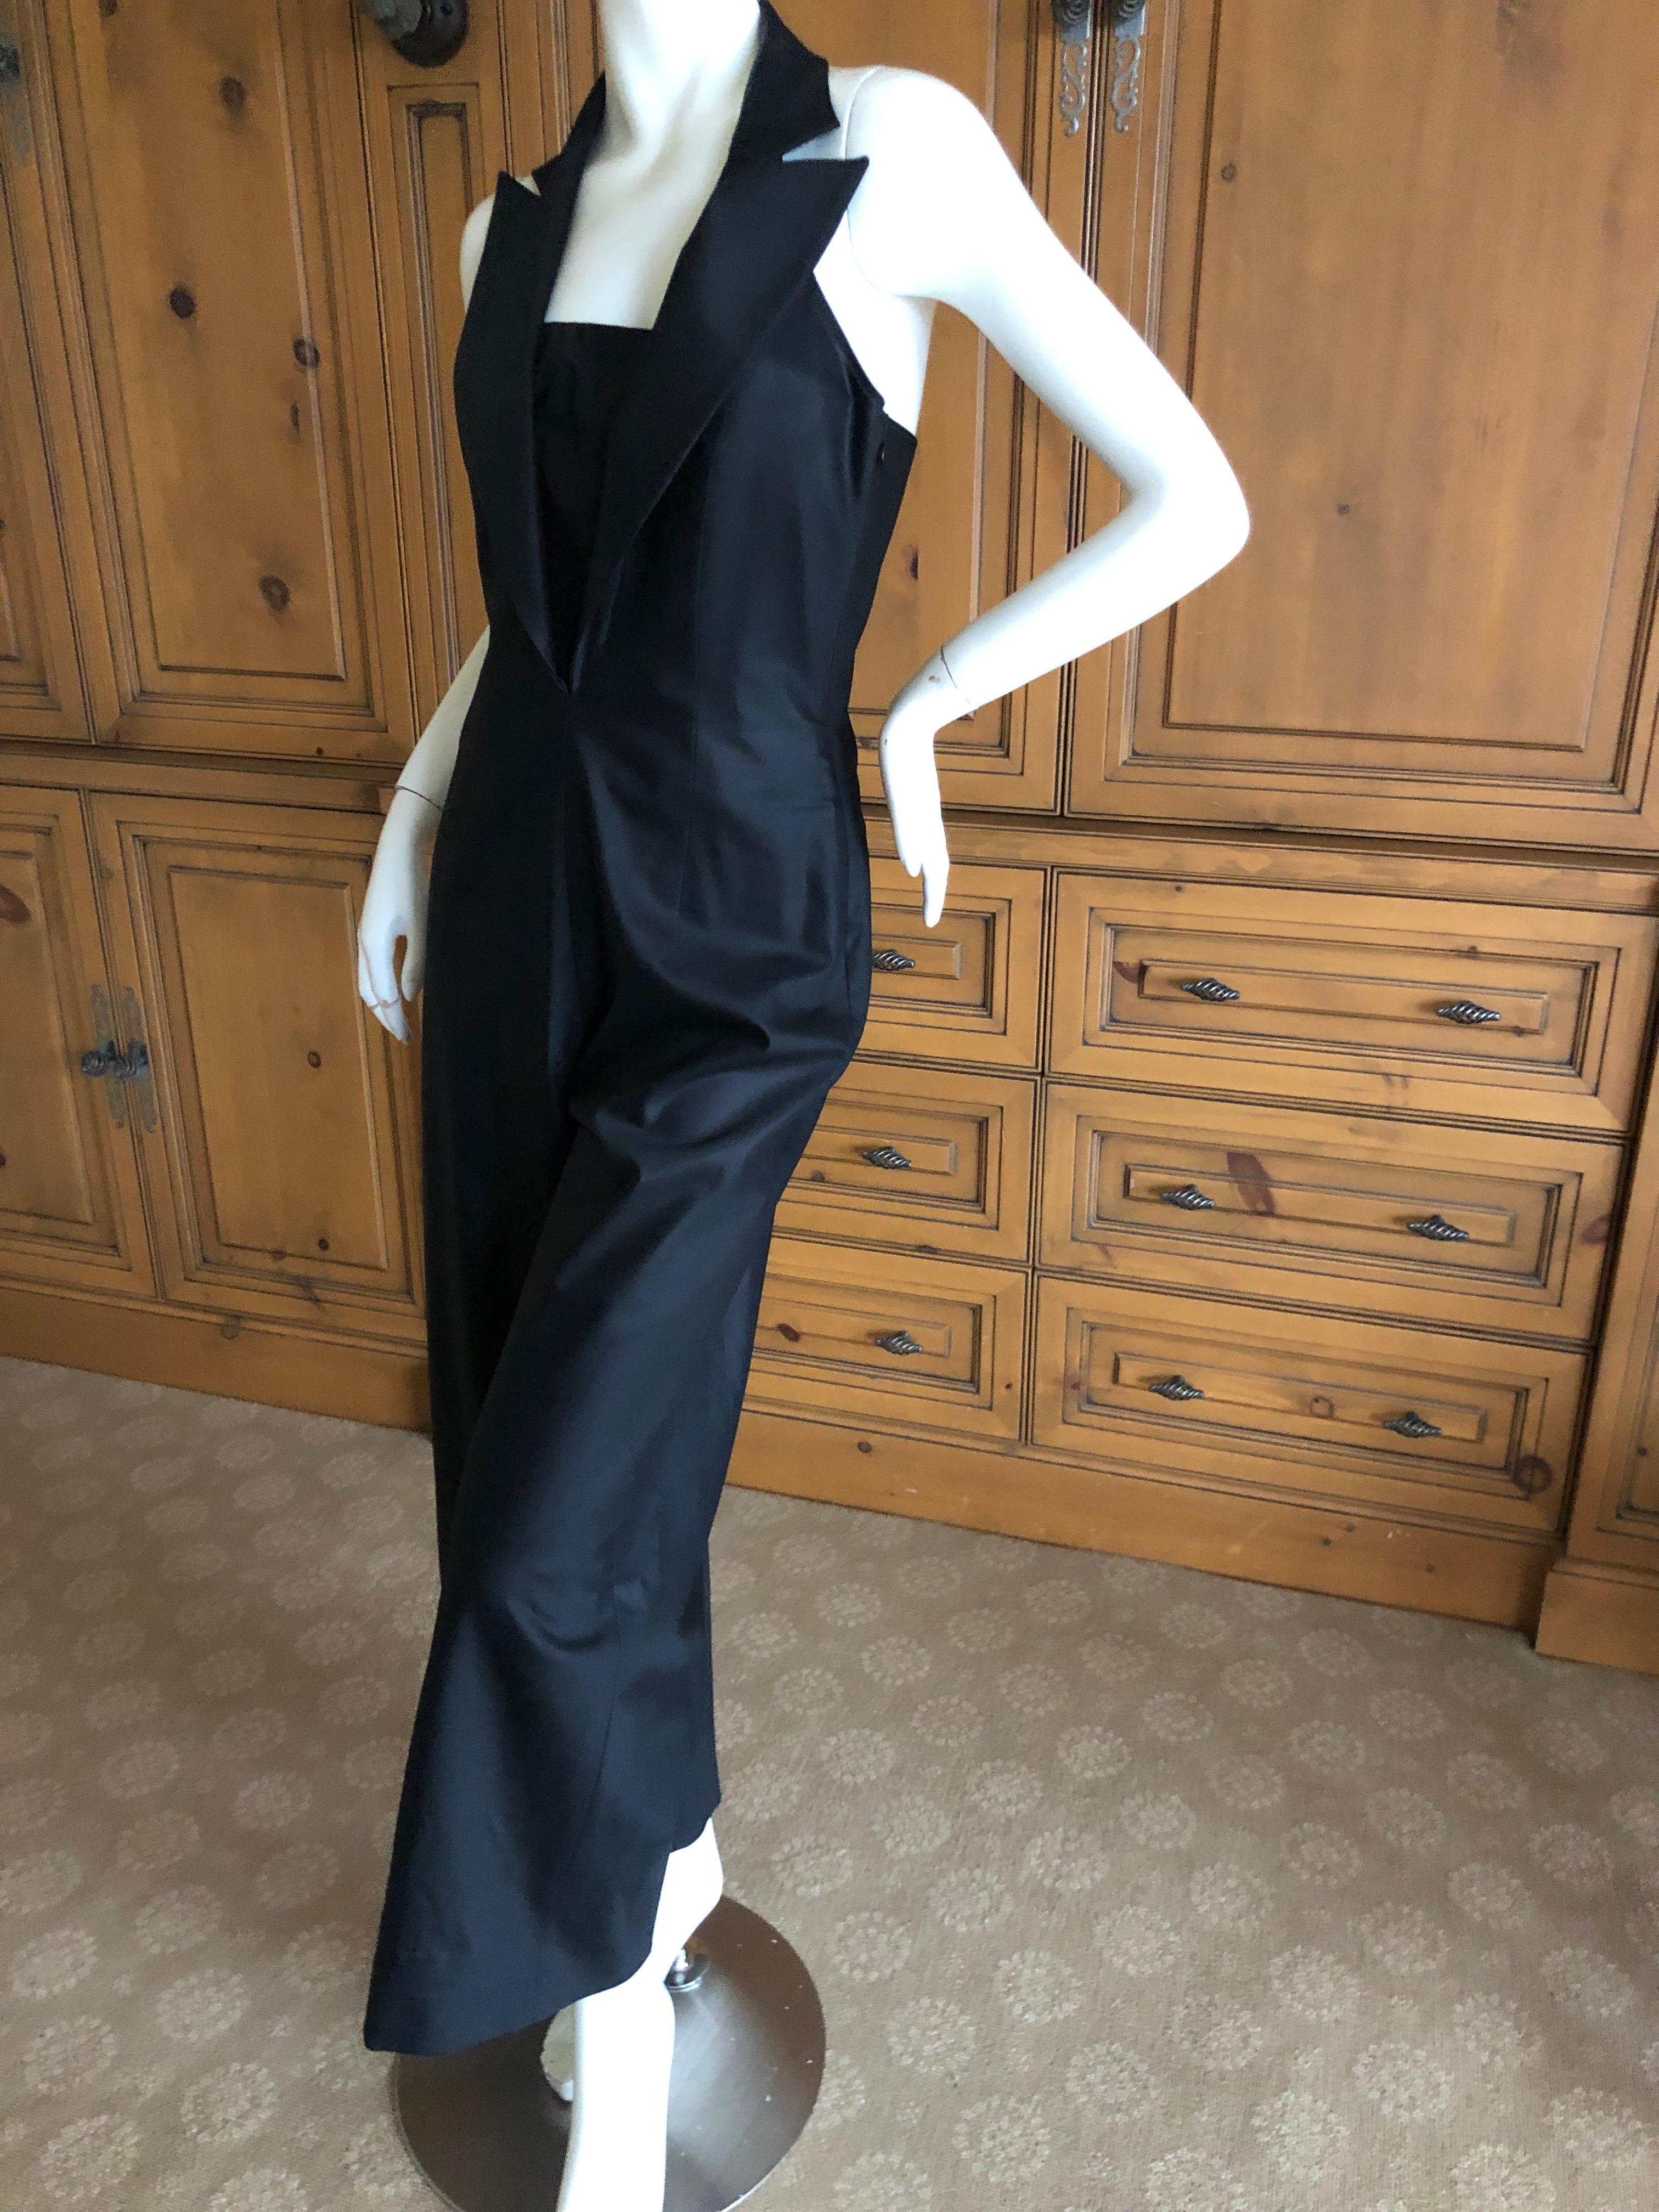 Thierry Mugler Couture Elegant Vintage Black Tuxedo Jumpsuit
Size 38
  Bust 36